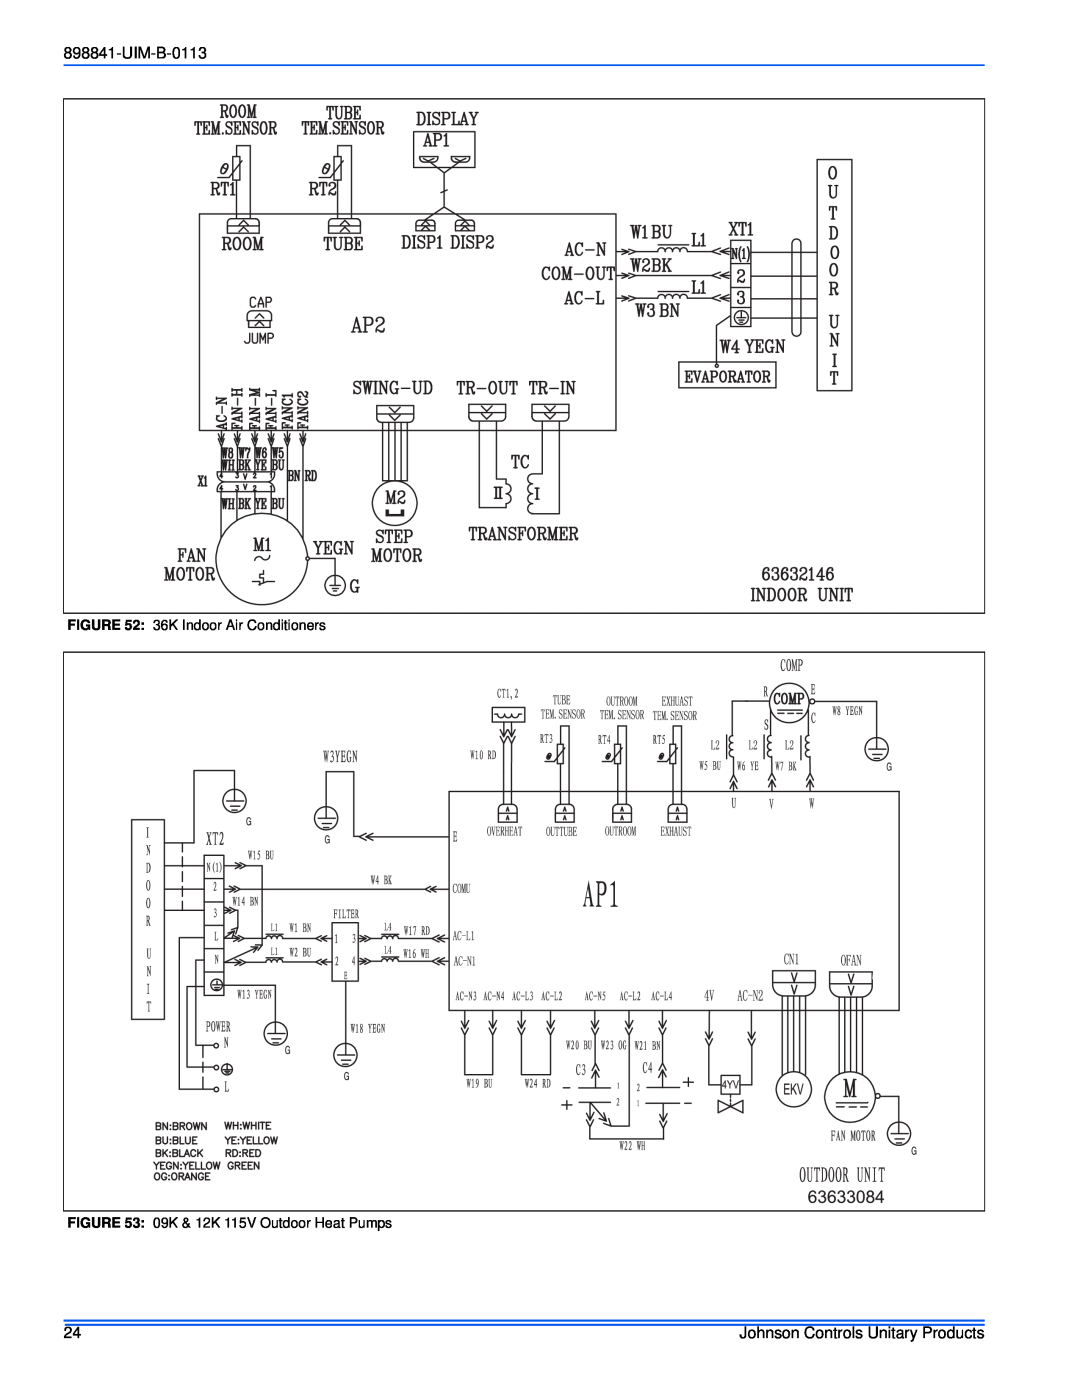 Johnson Controls 22 SEER installation manual UIM-B-0113, 36K Indoor Air Conditioners, 09K & 12K 115V Outdoor Heat Pumps 